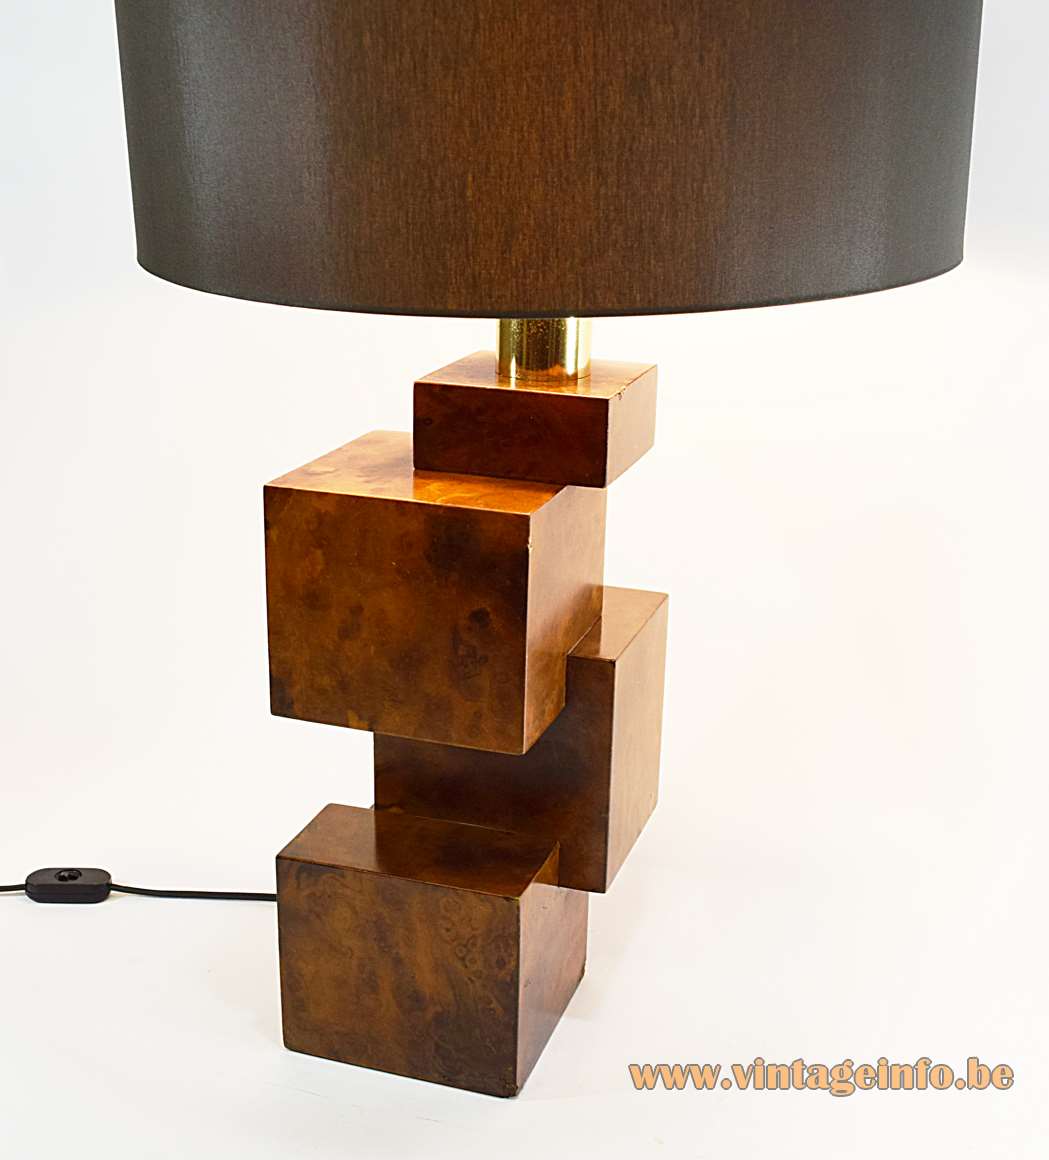 Burr Walnut Cityscape Table Lamp, Wooden Cube Desk Lamp